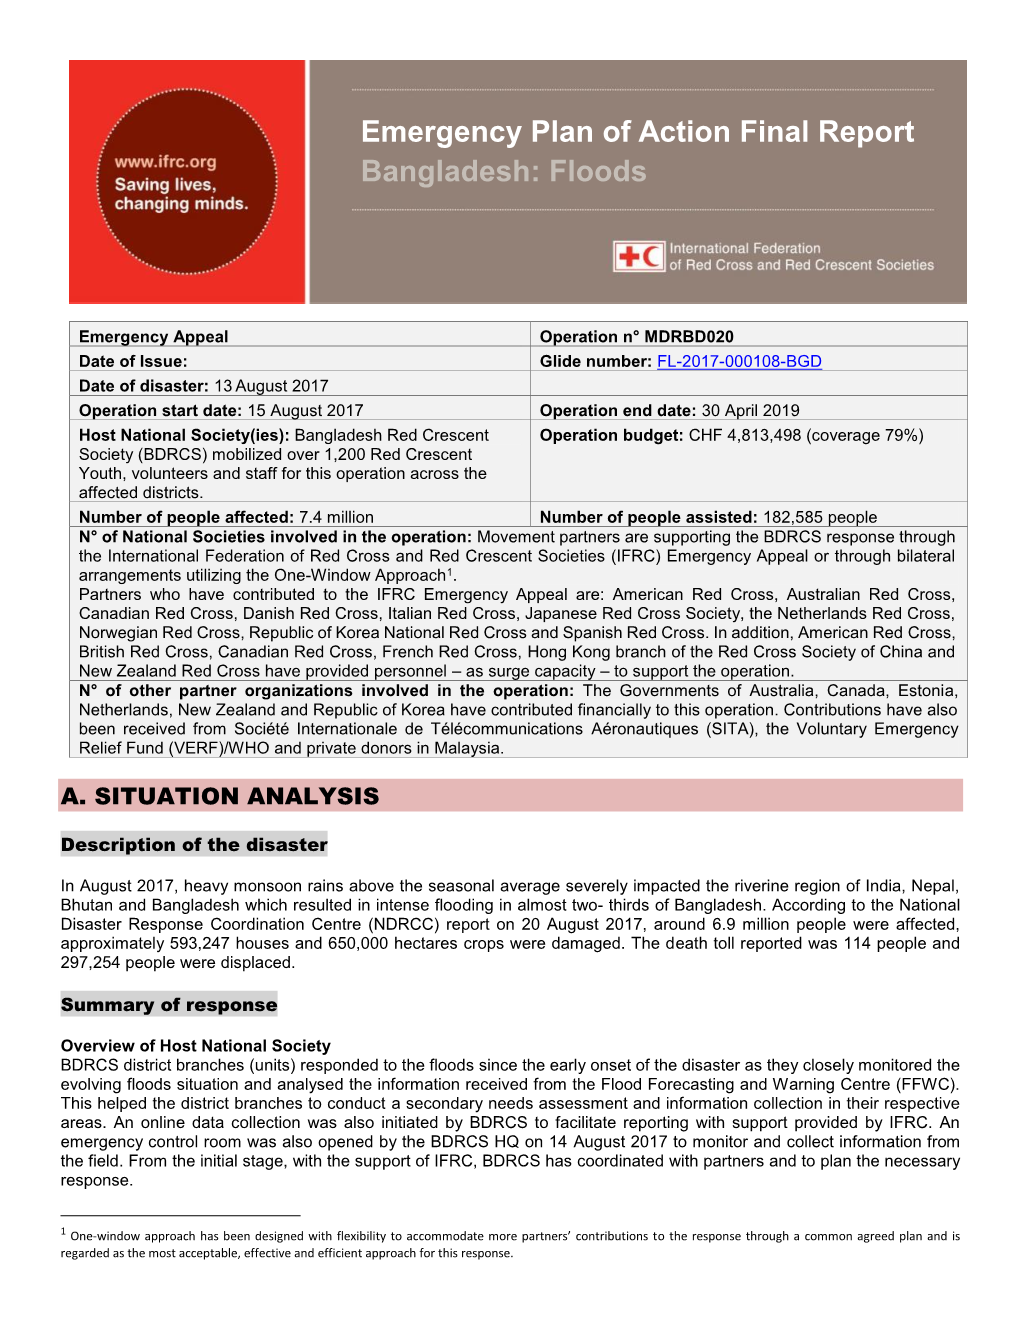 Emergency Plan of Action Final Report Bangladesh: Floods